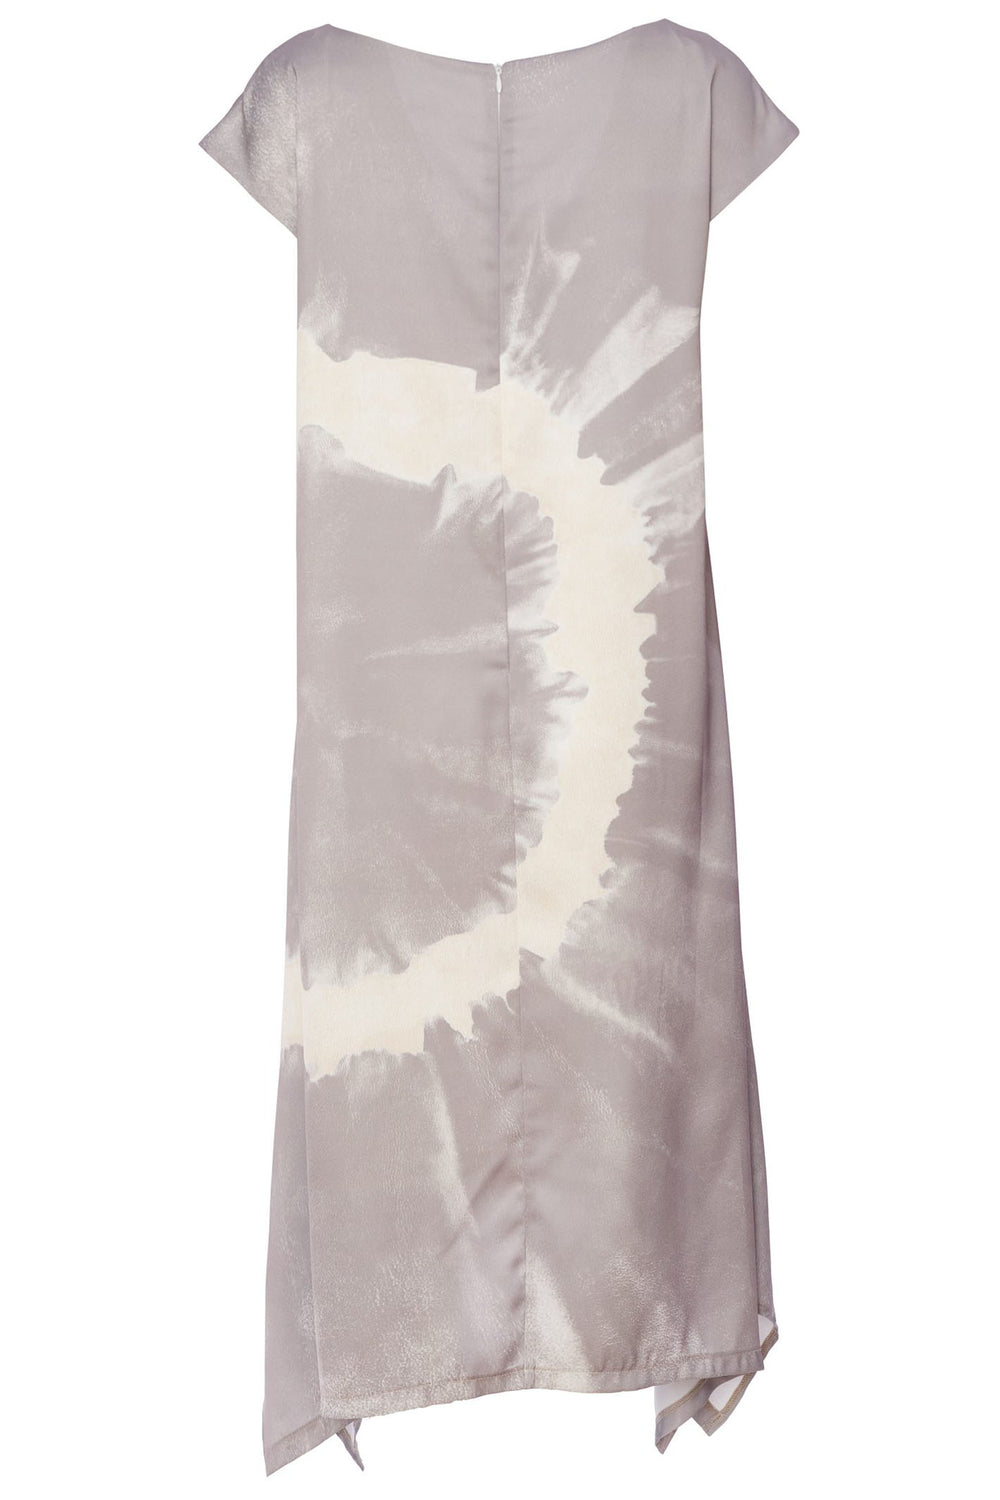 Naya NAS24321 Mink Tie Dye Dress - Olivia Grace Fashion